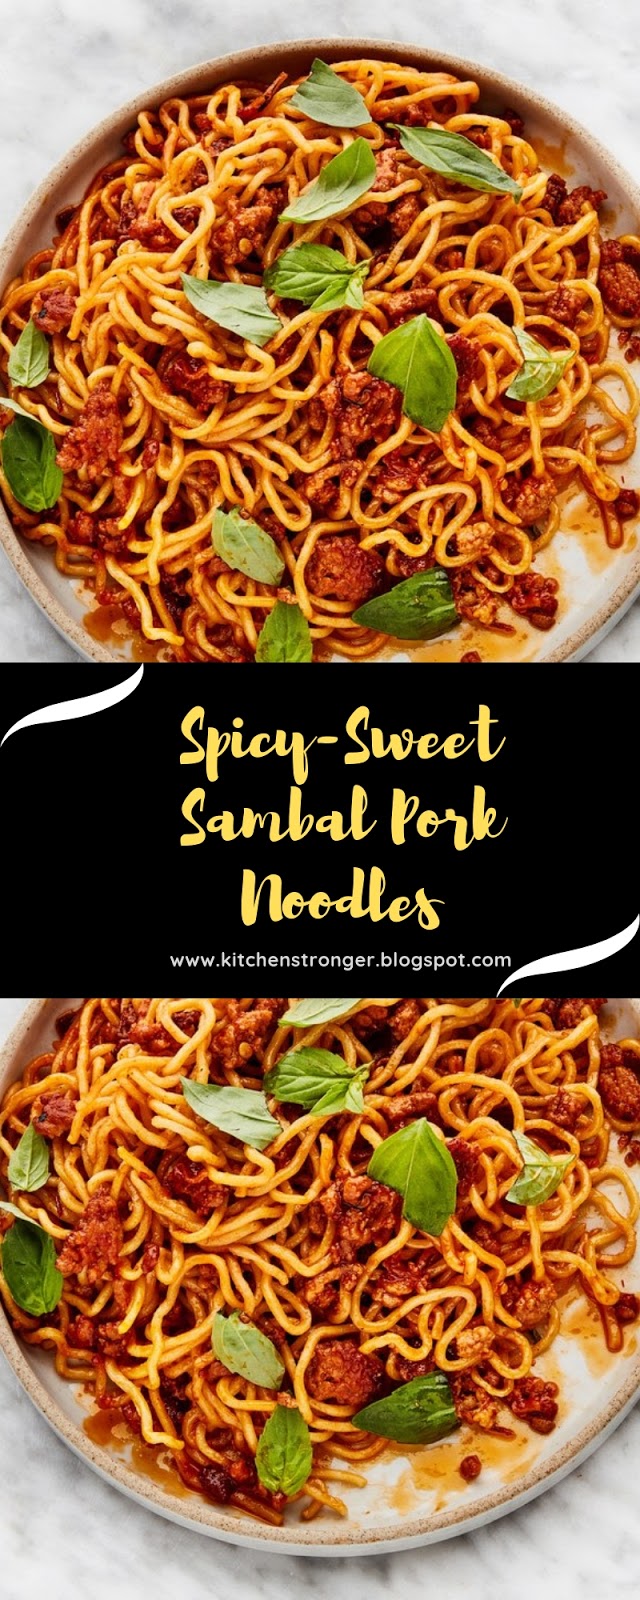 Spicy-Sweet Sambal Pork Noodles